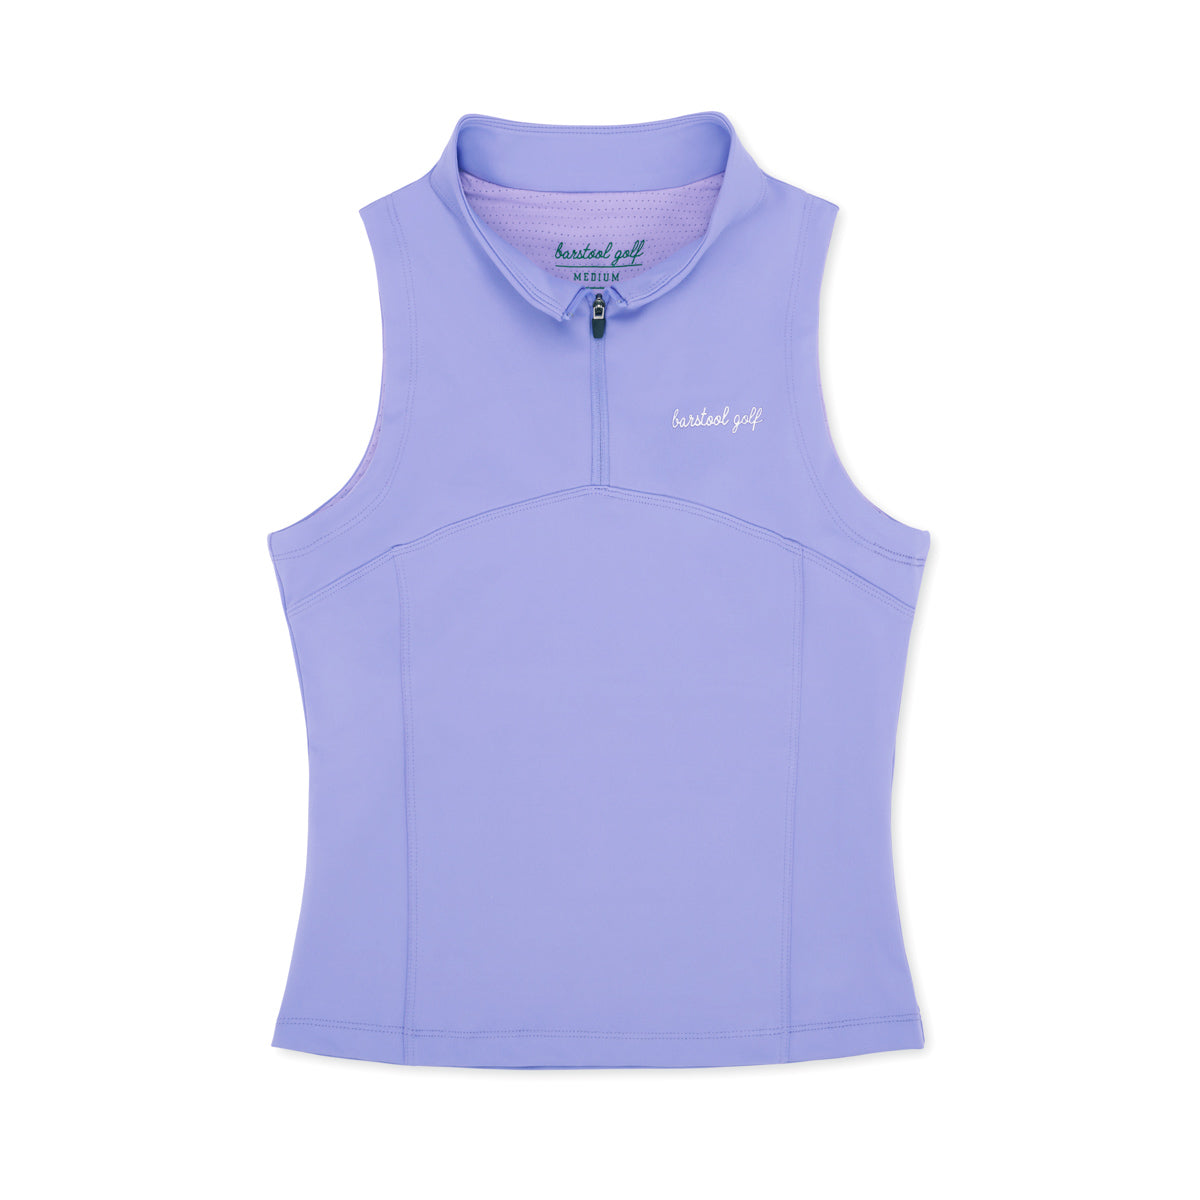 Barstool Golf Women's Zip Dress - Fore Play Dresses, Clothing & Merch –  Barstool Sports